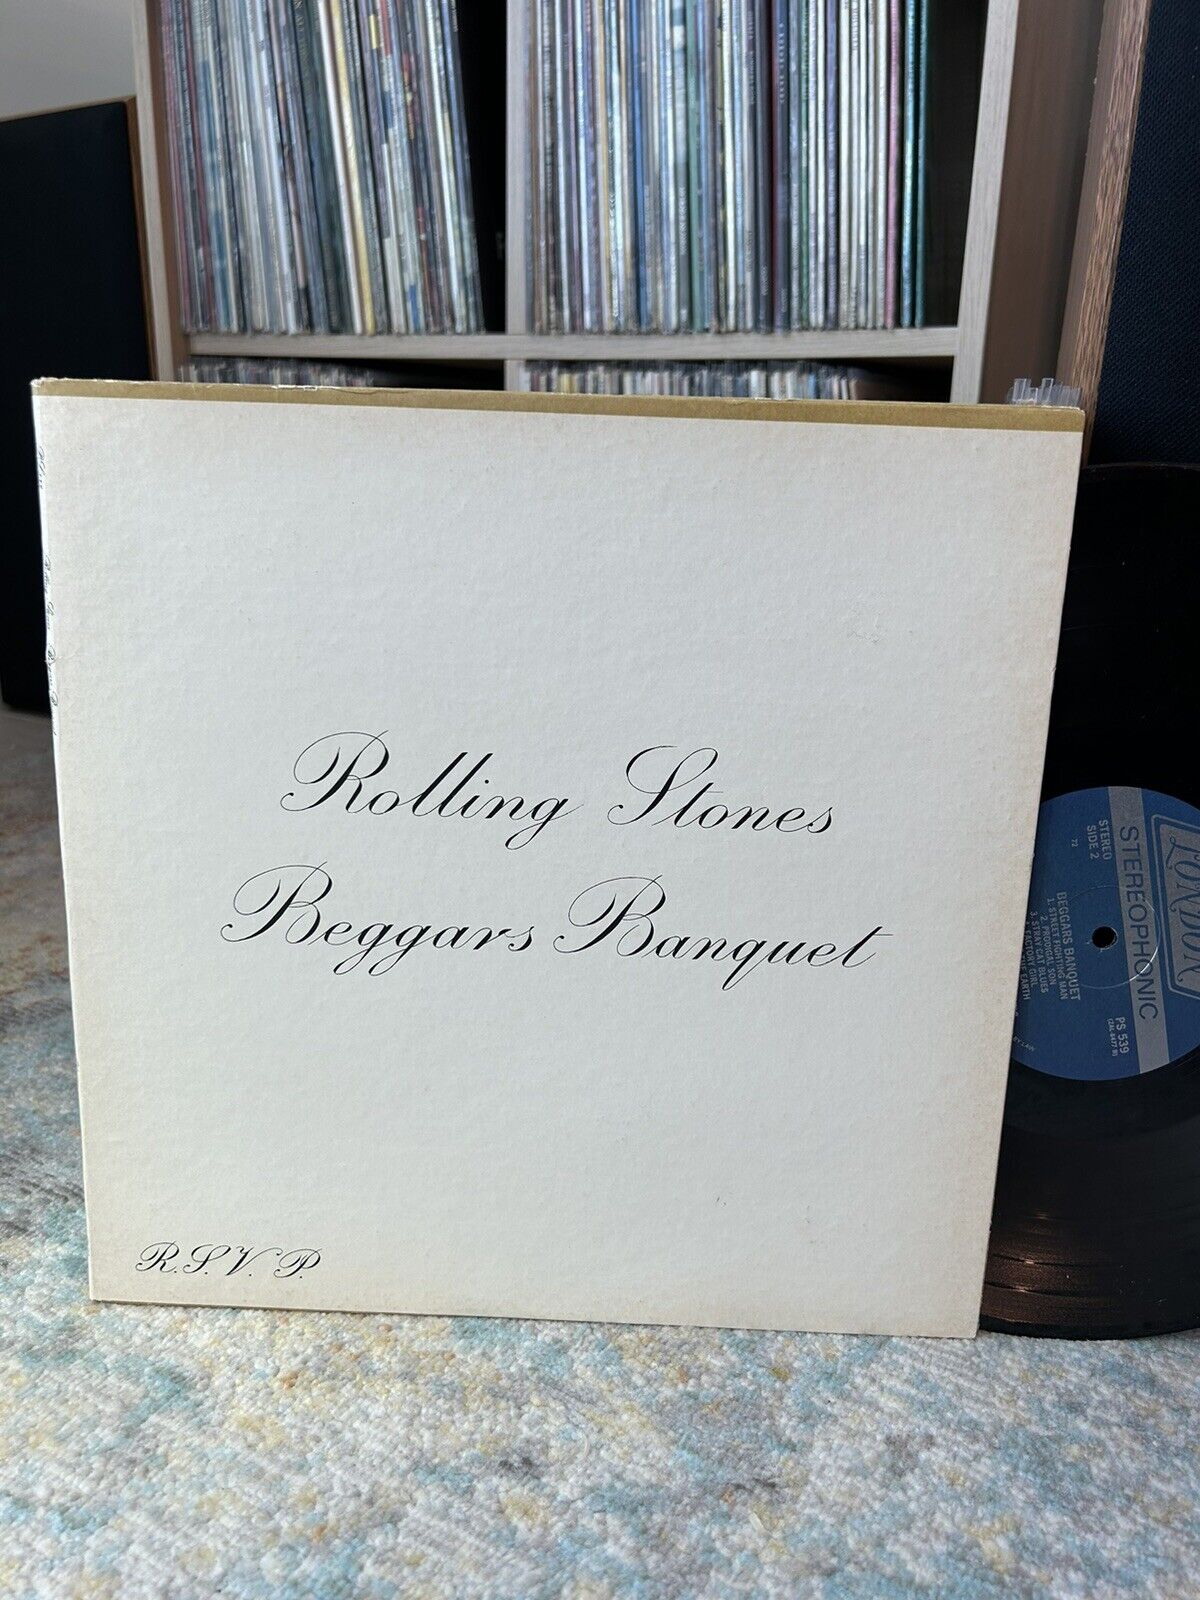 THE ROLLING STONES Beggars Banquet Original 1968 LONDON BLUE label LP PS 539